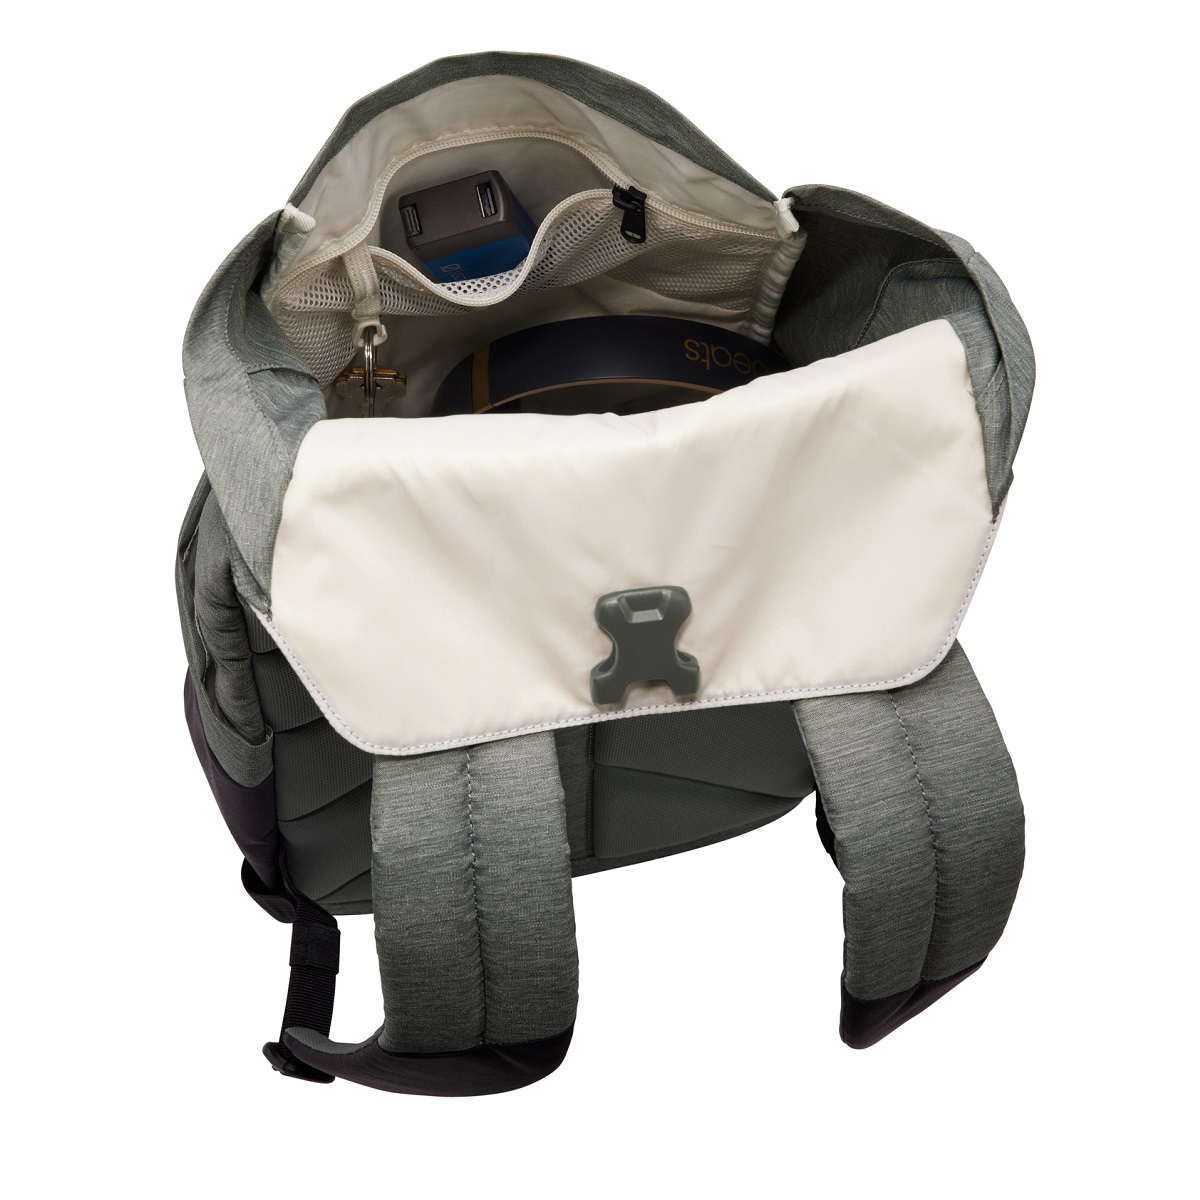 Univerzalni ruksak Thule Lithos Backpack 16L zeleno-crni